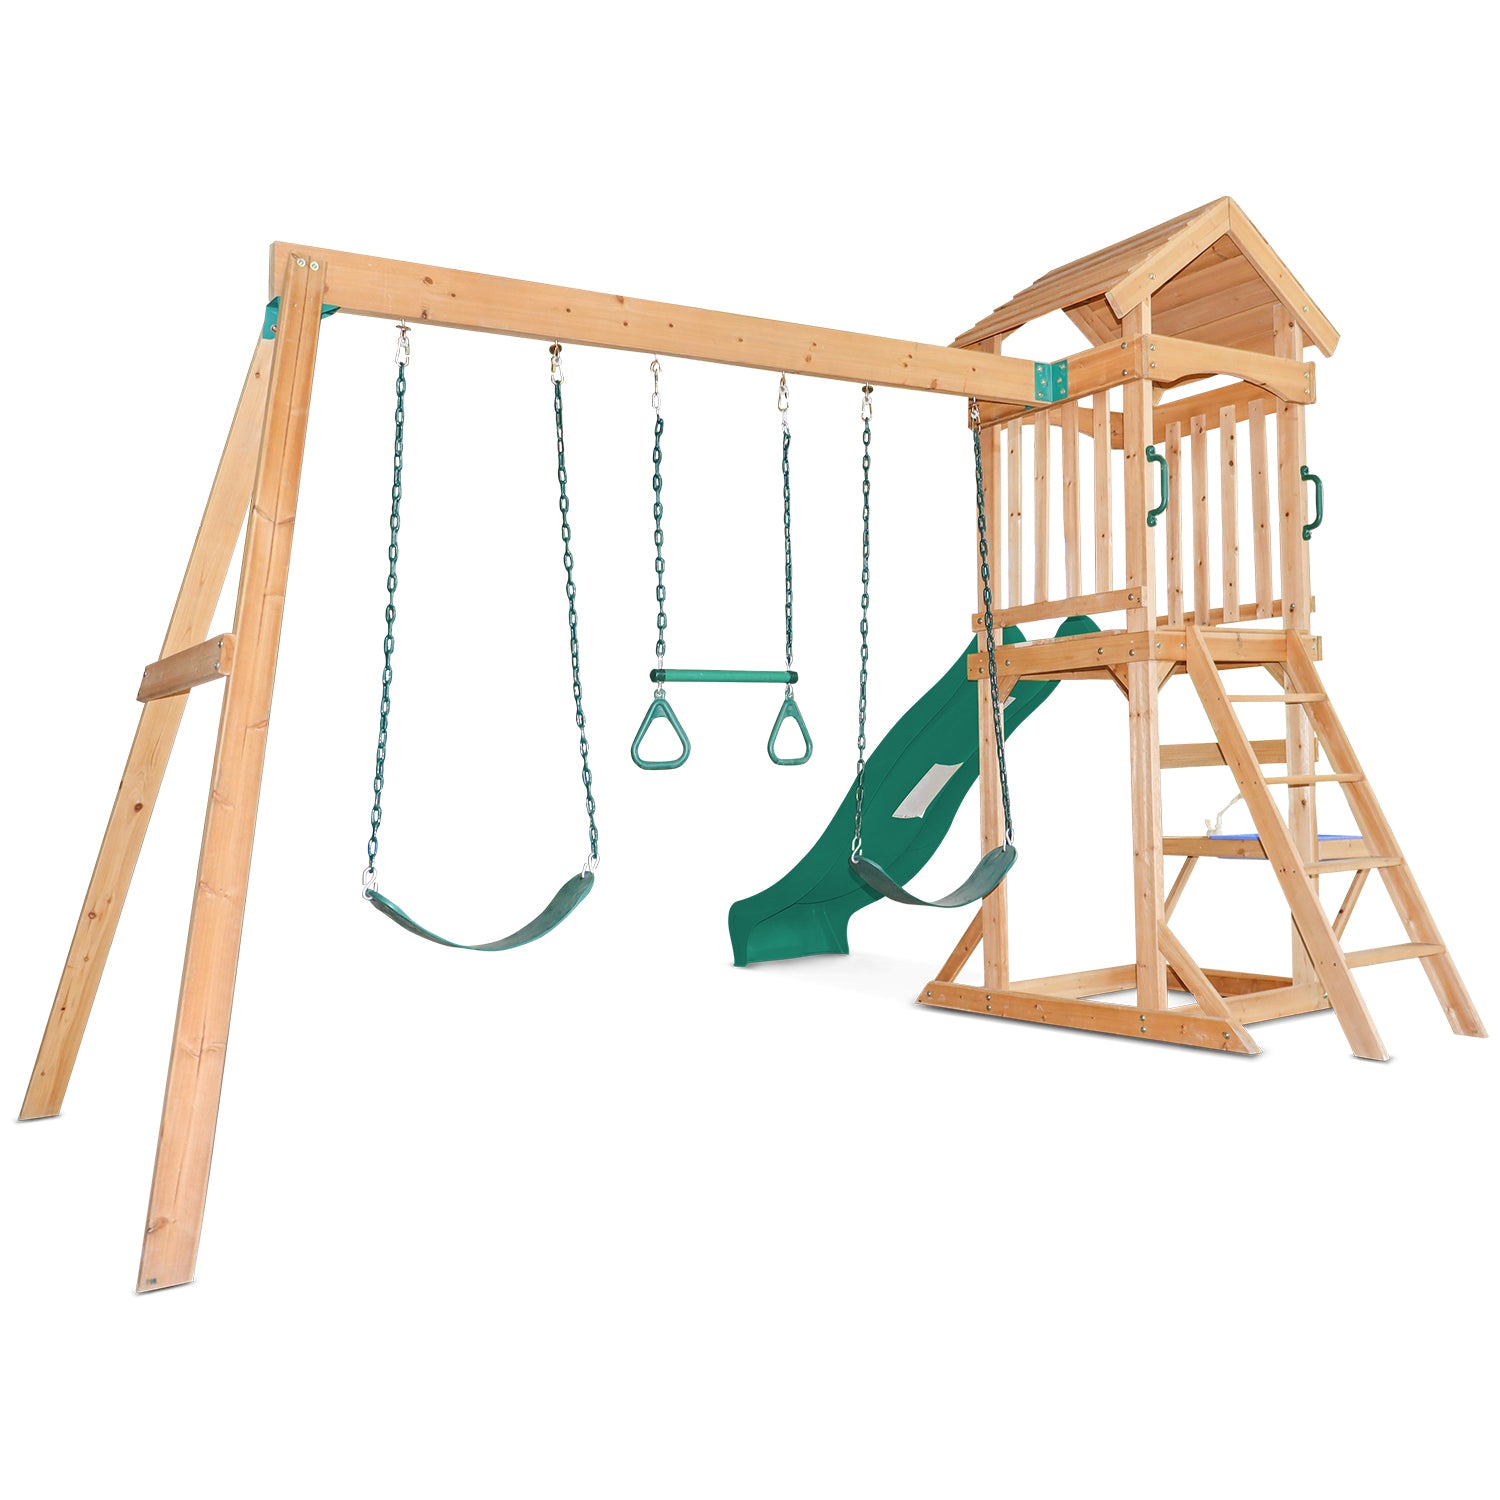 Lifespan Kids Albert Park Play Centre with Green Slide